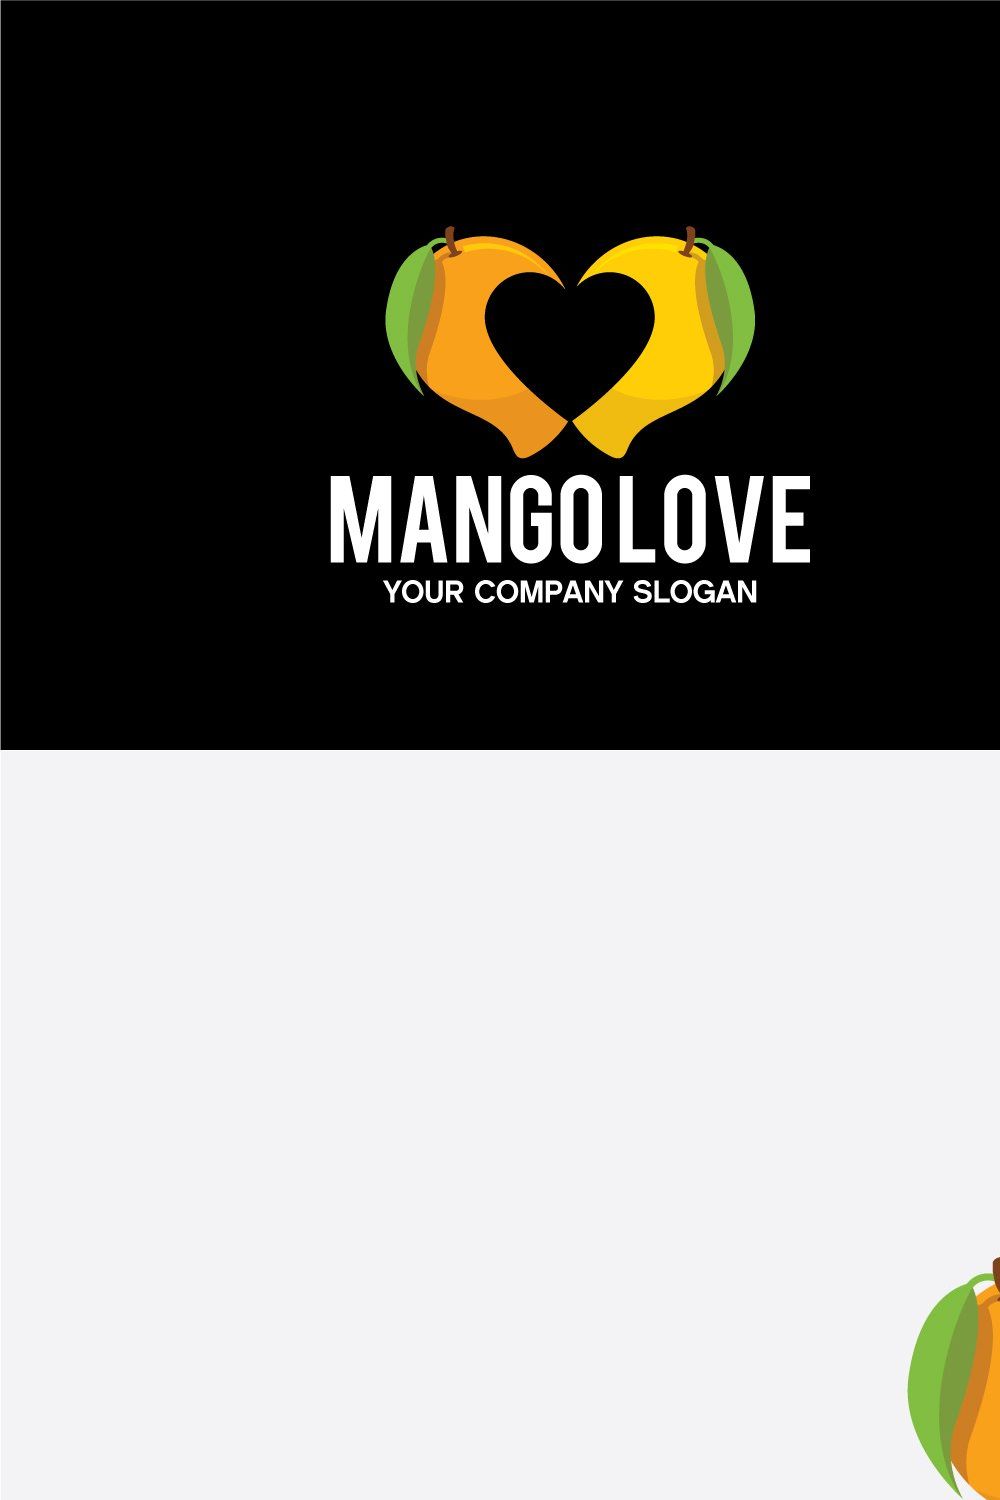 mango love pinterest preview image.